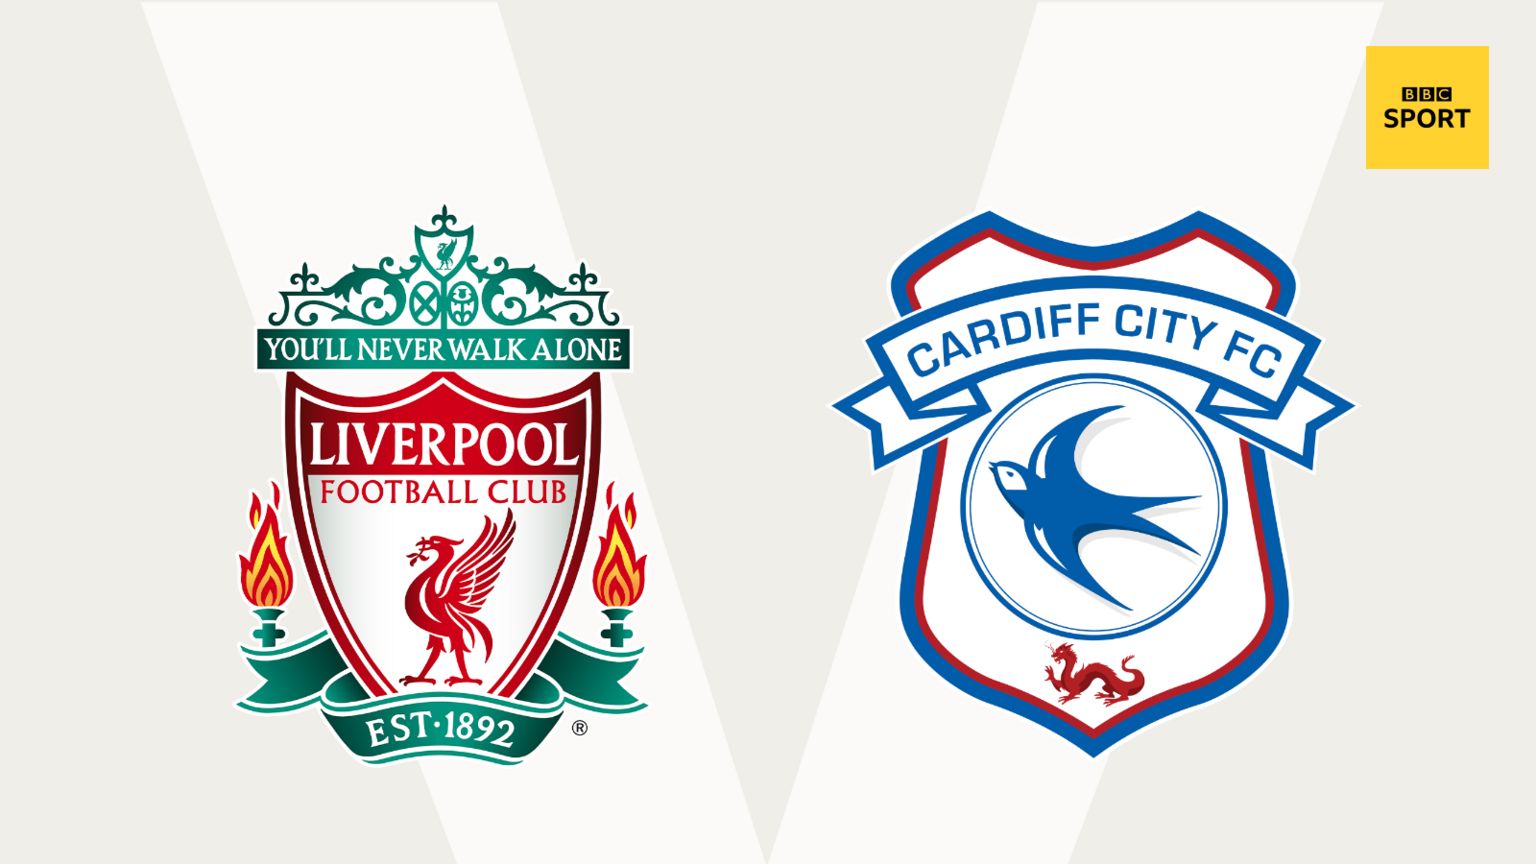 Liverpool v Cardiff